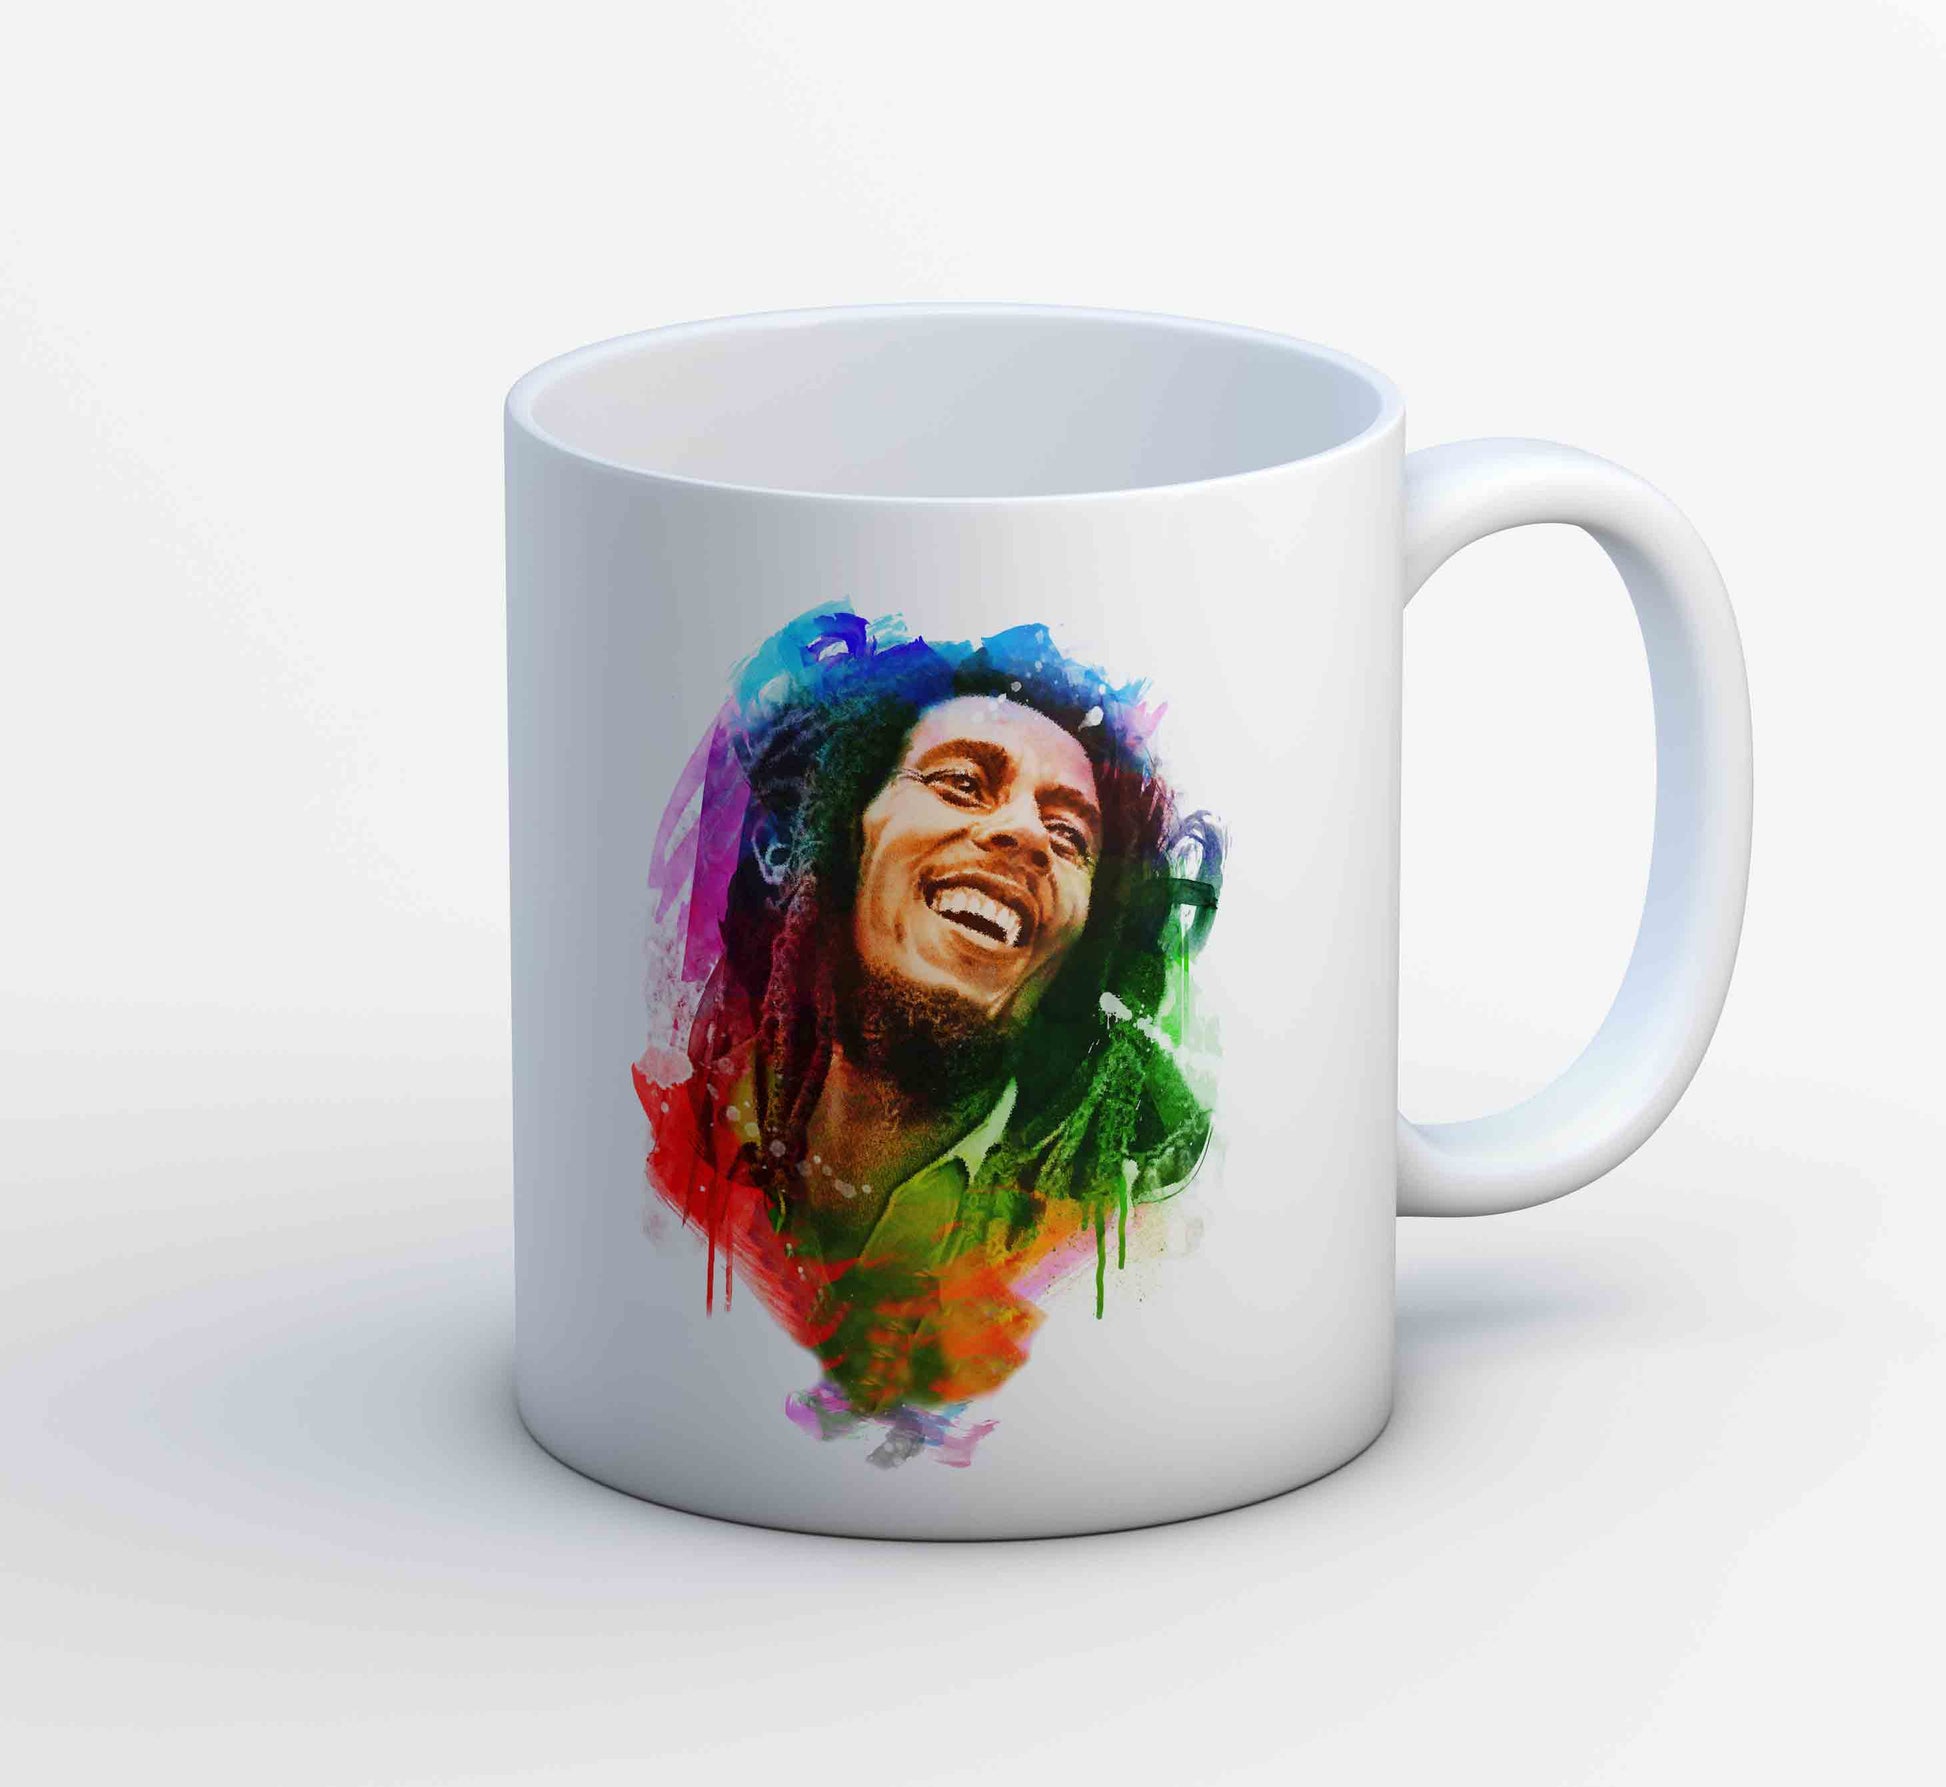 bob marley the pioneer of reggae mug coffee ceramic music band buy online india the banyan tee tbt men women girls boys unisex